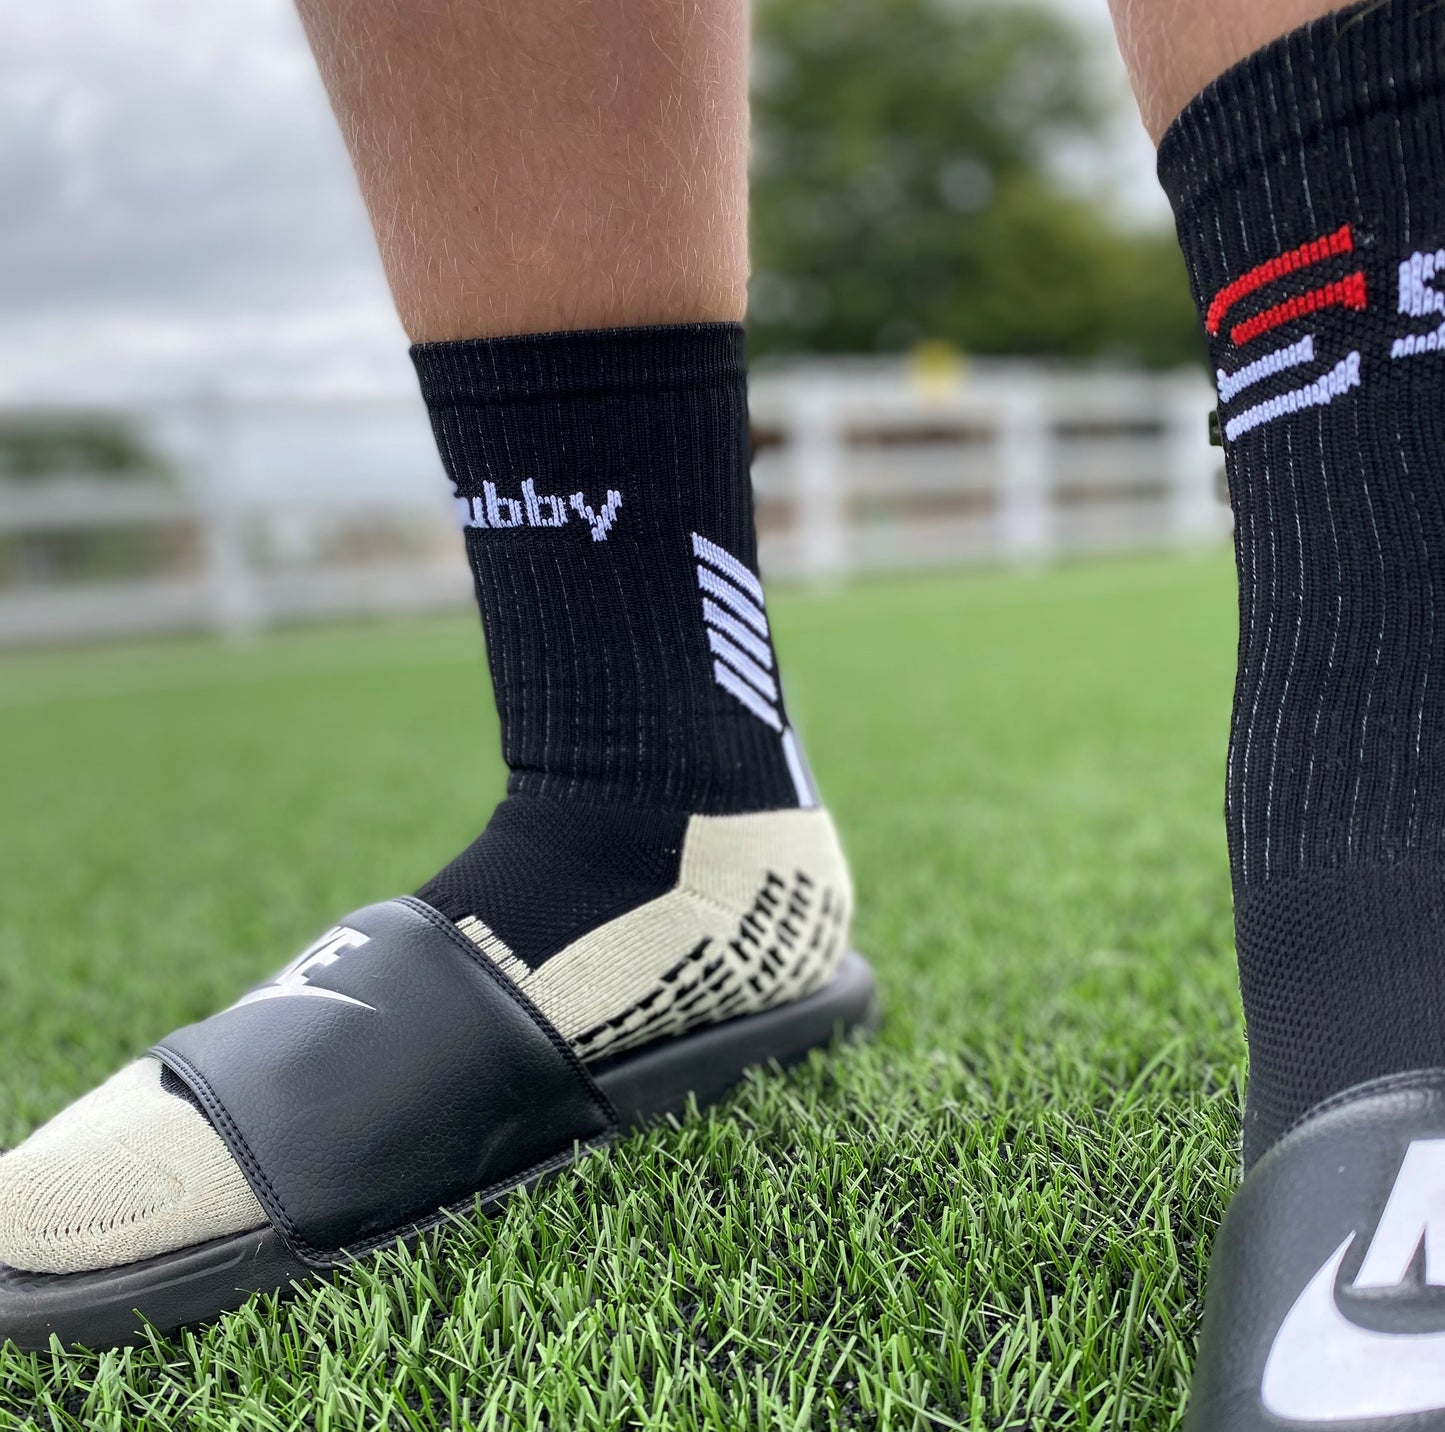 How to wear your GTE Grip Socks #gaintheedge #gripsocks #soccer #footb